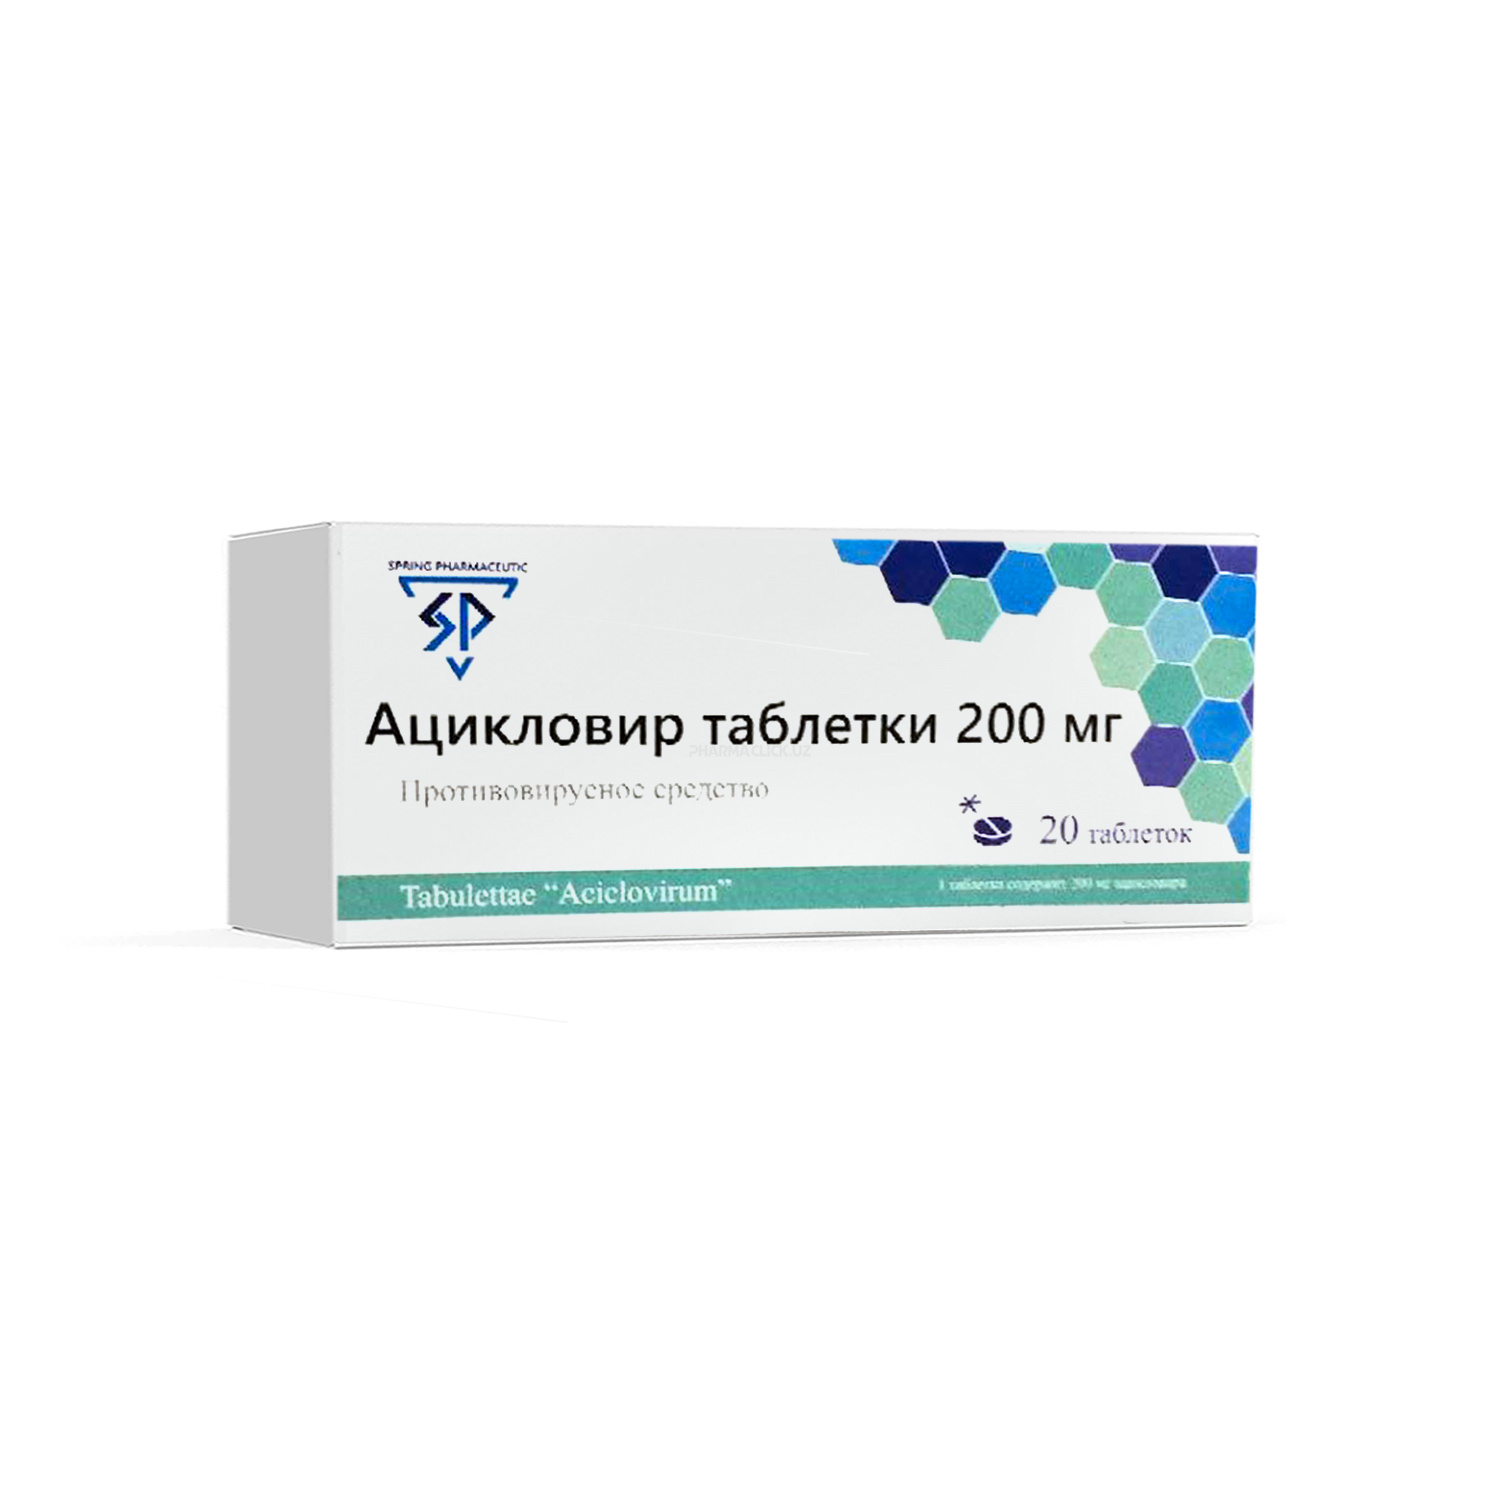 Atsiklovir tab. 200 mg №20 (SPRING PHARMACEUTICAL)